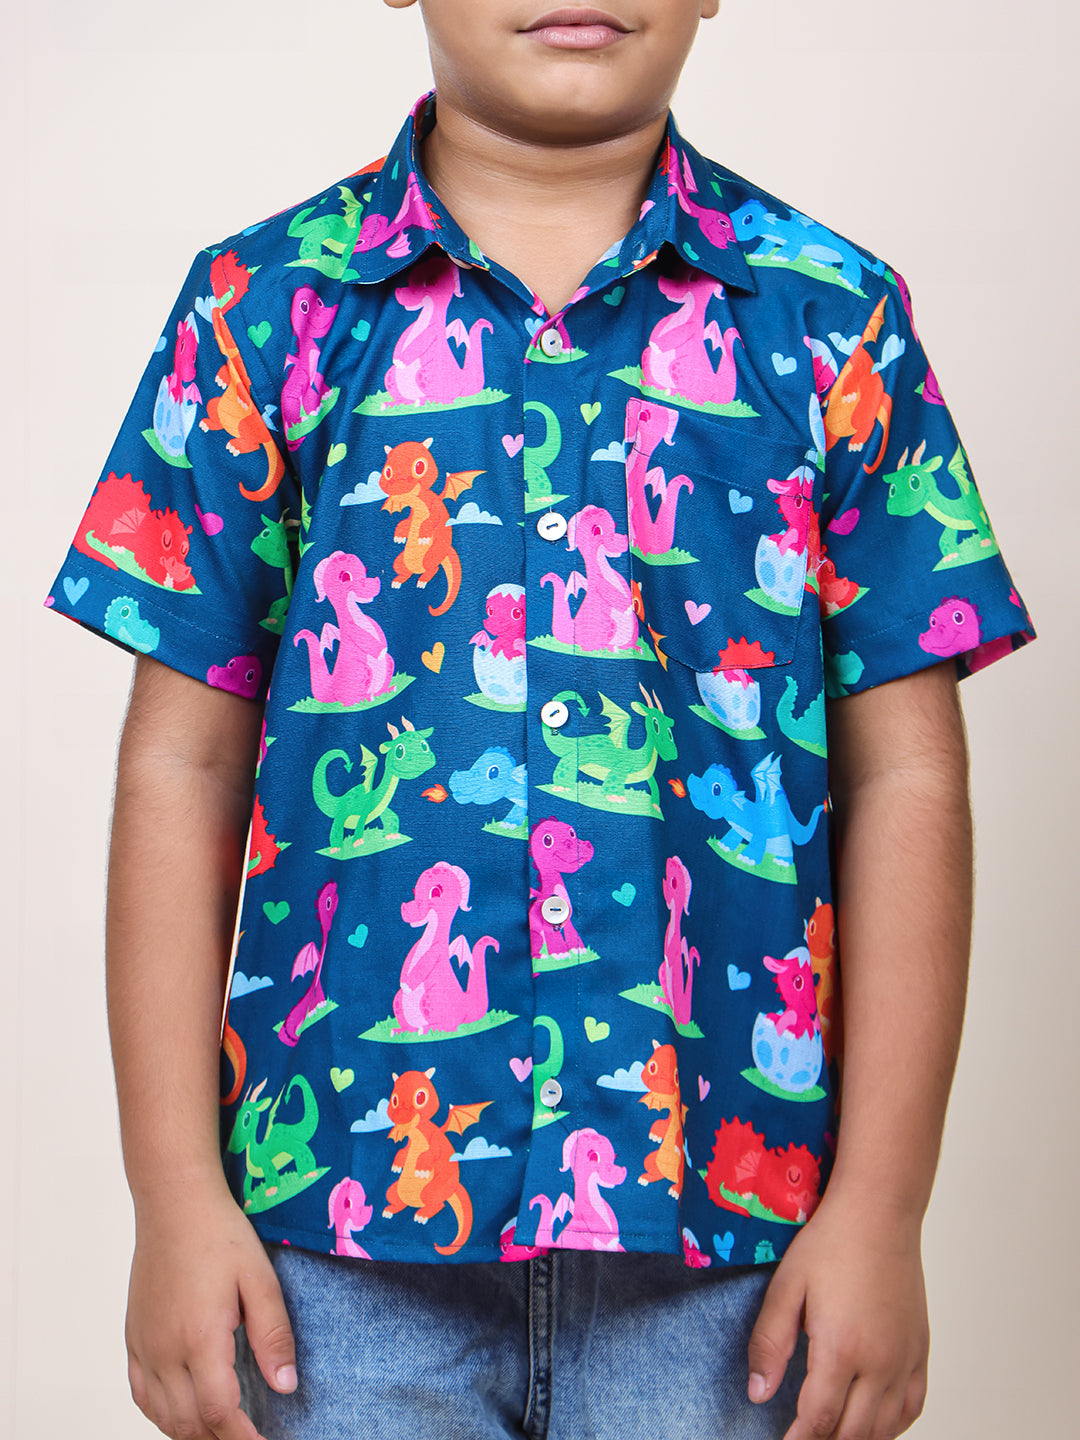 Boys Navy Blue Dinosaur Printed Cotton Shirt